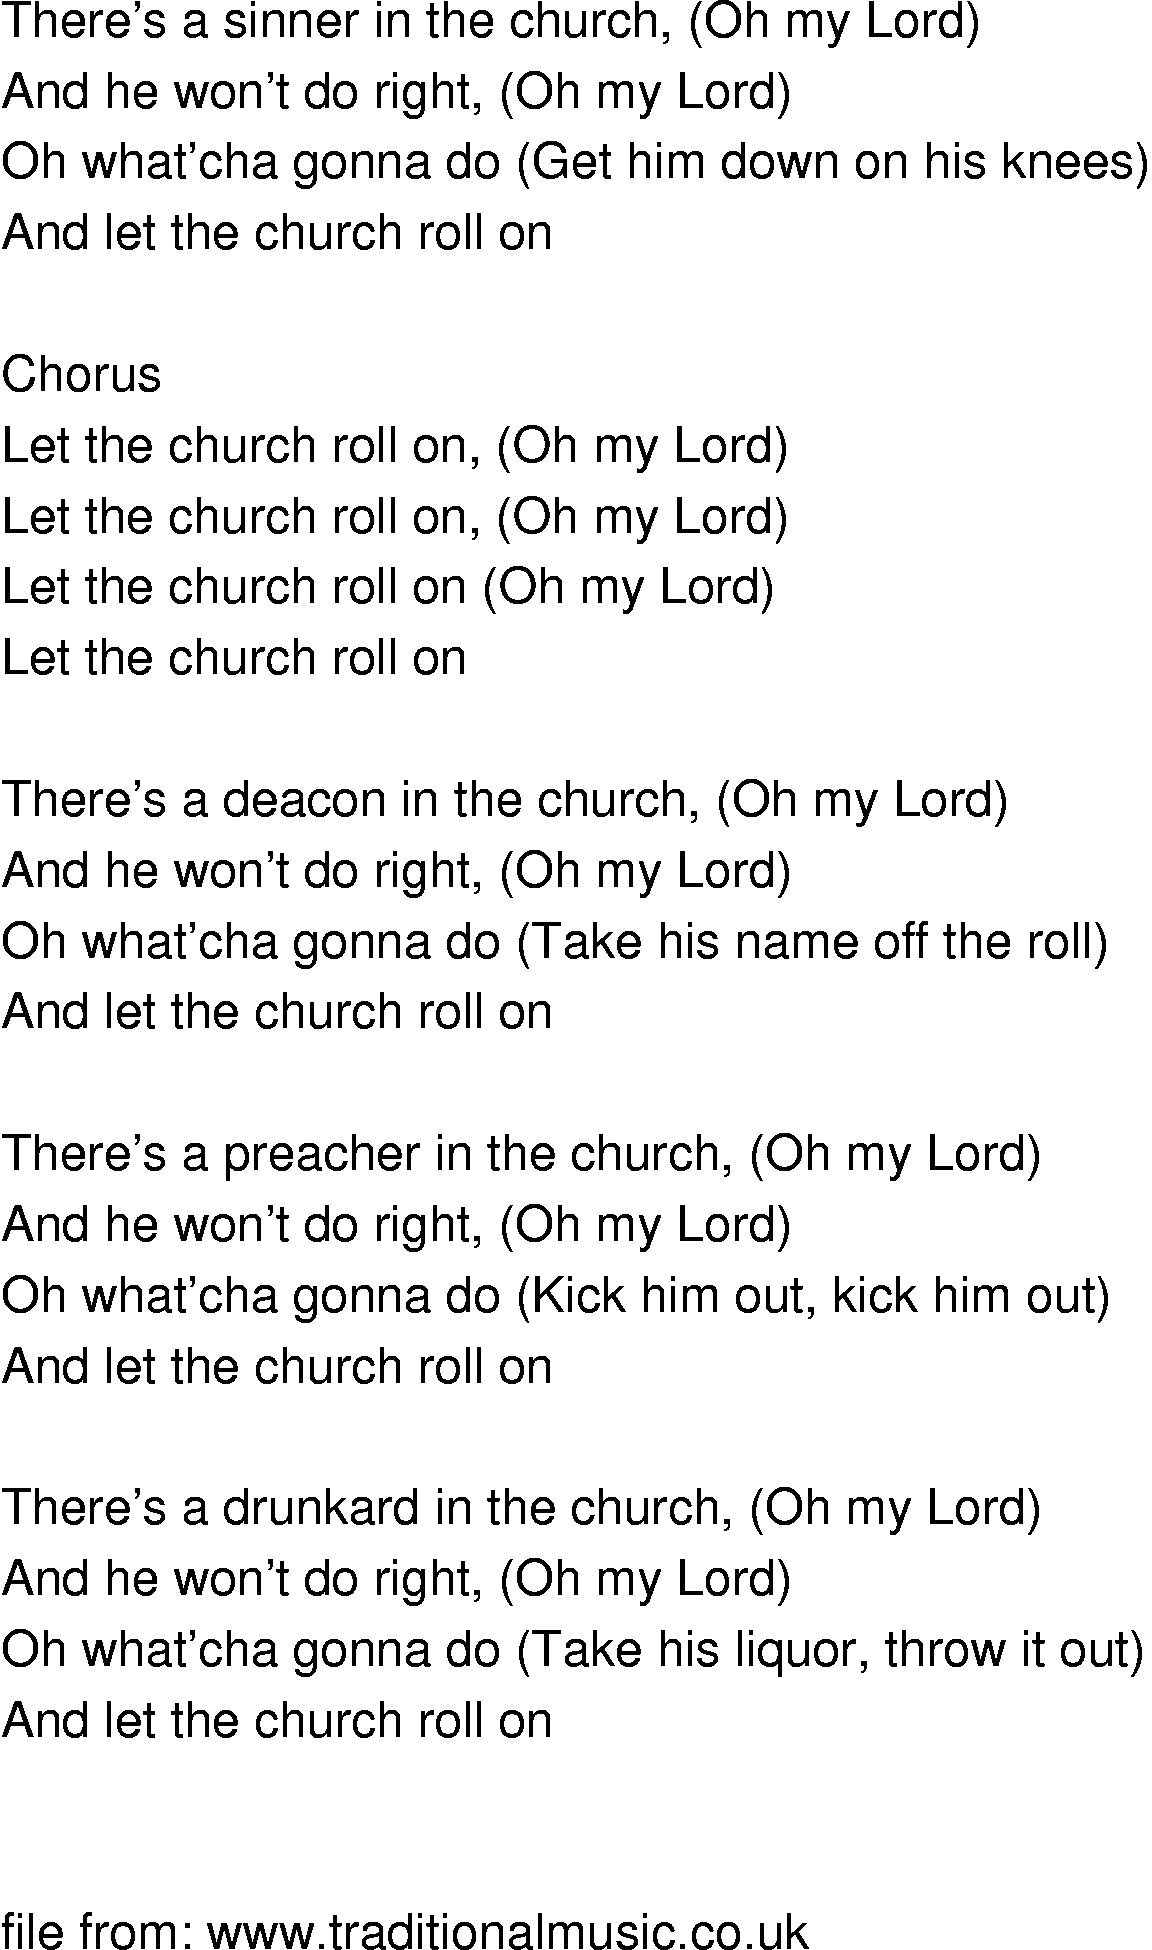 Old-Time (oldtimey) Song Lyrics - let the church roll on